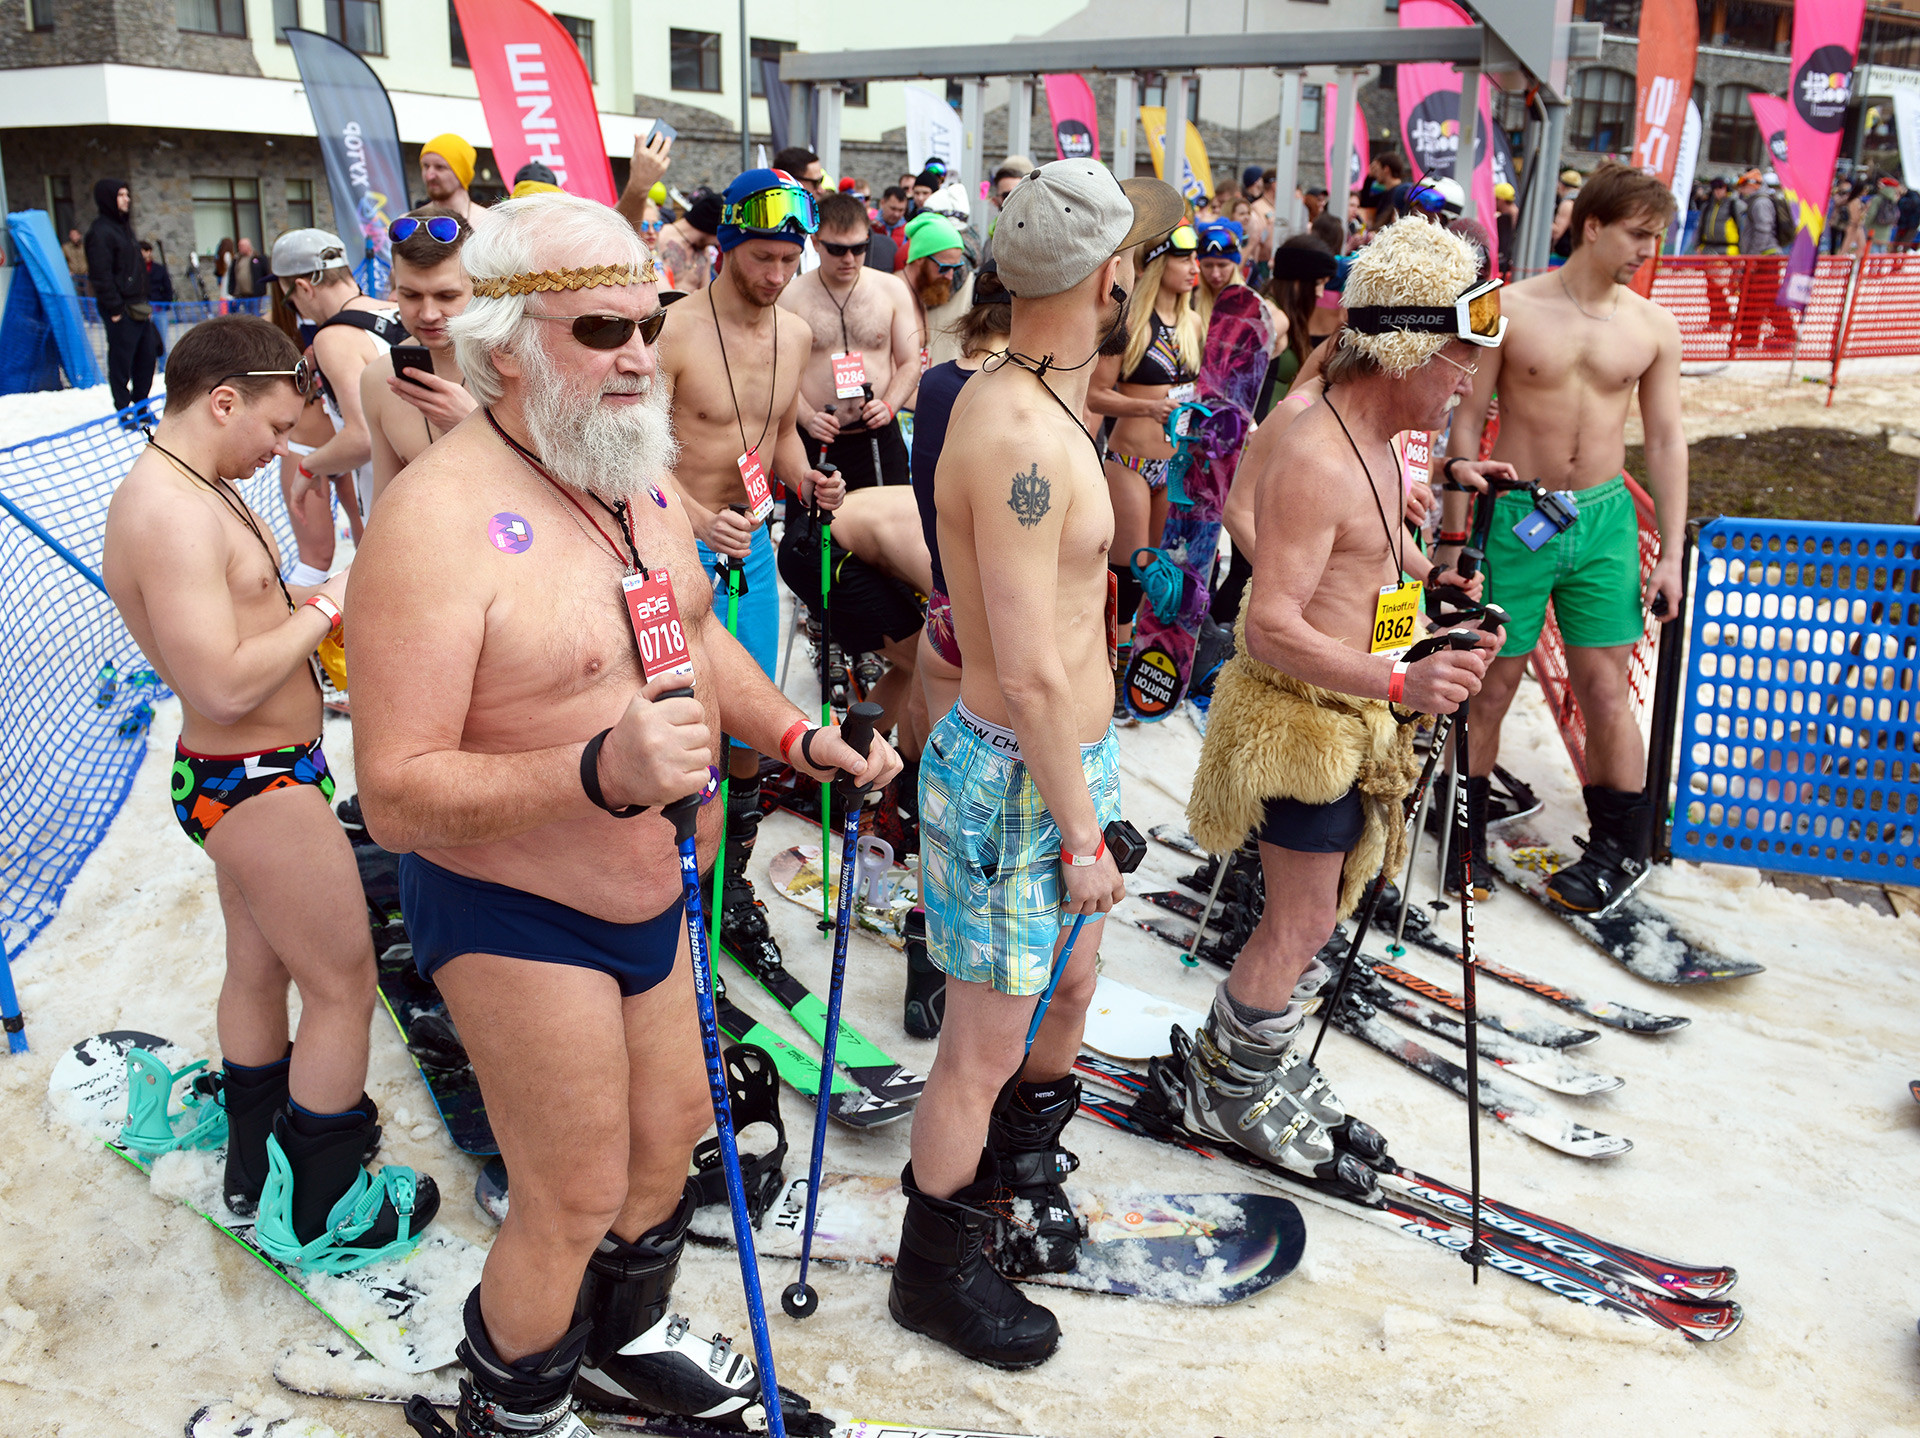 Mass bikini skiing: Sochi's winter resort hit by naked heat wave